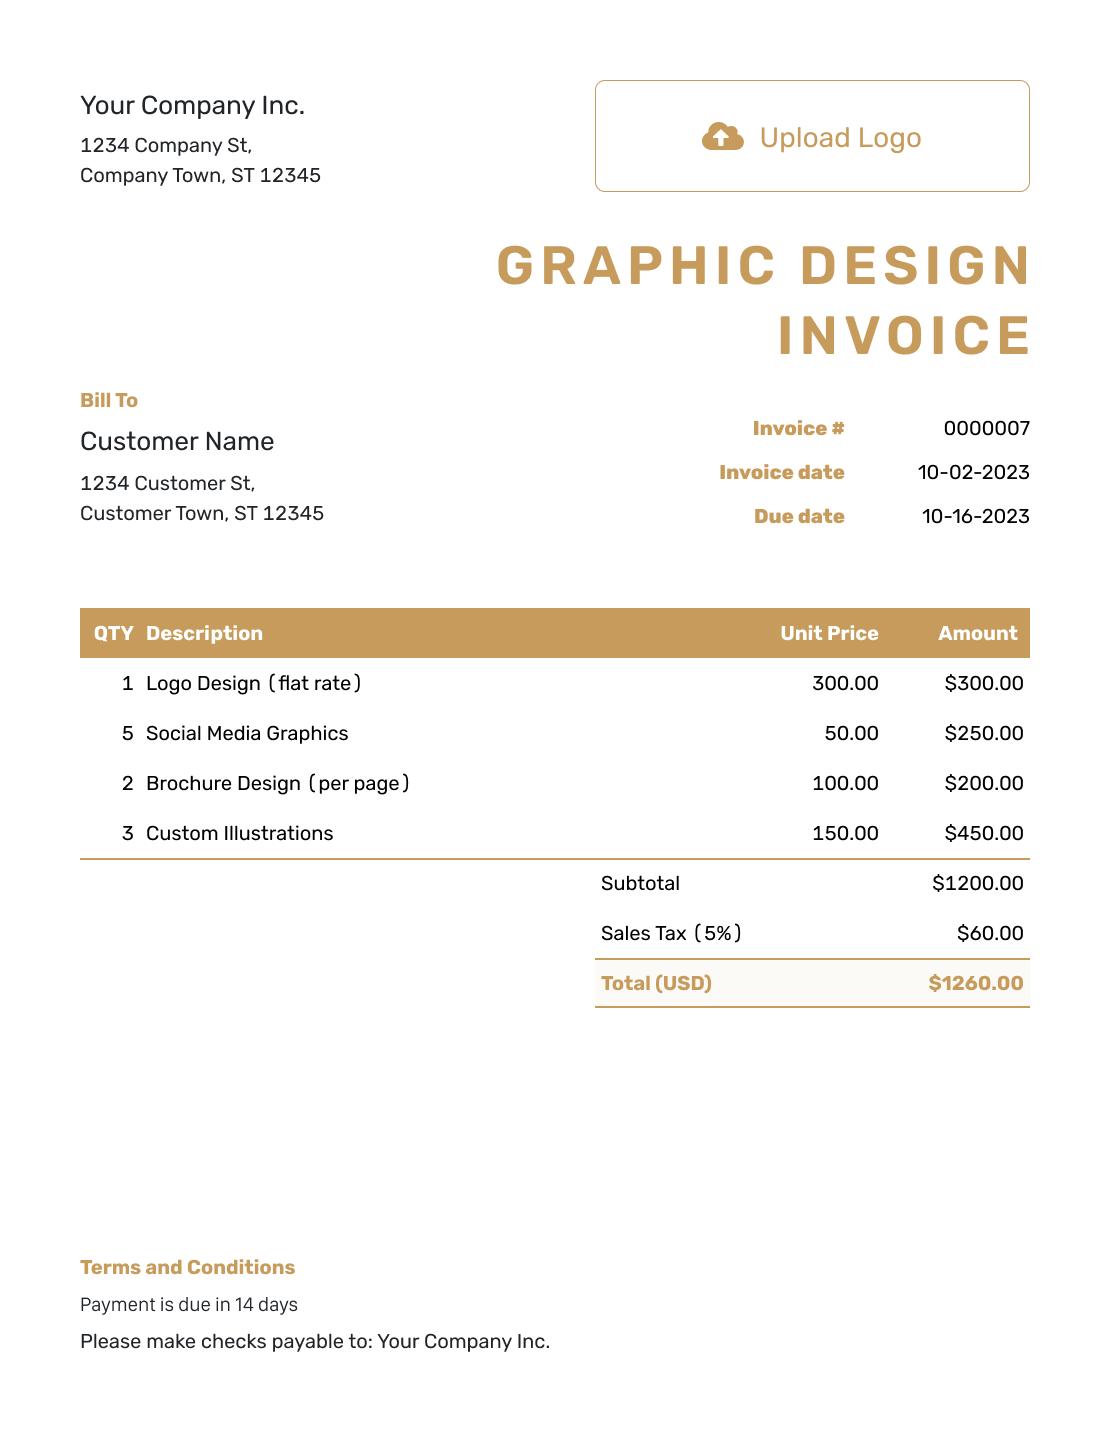 Basic Graphic Design Invoice Template